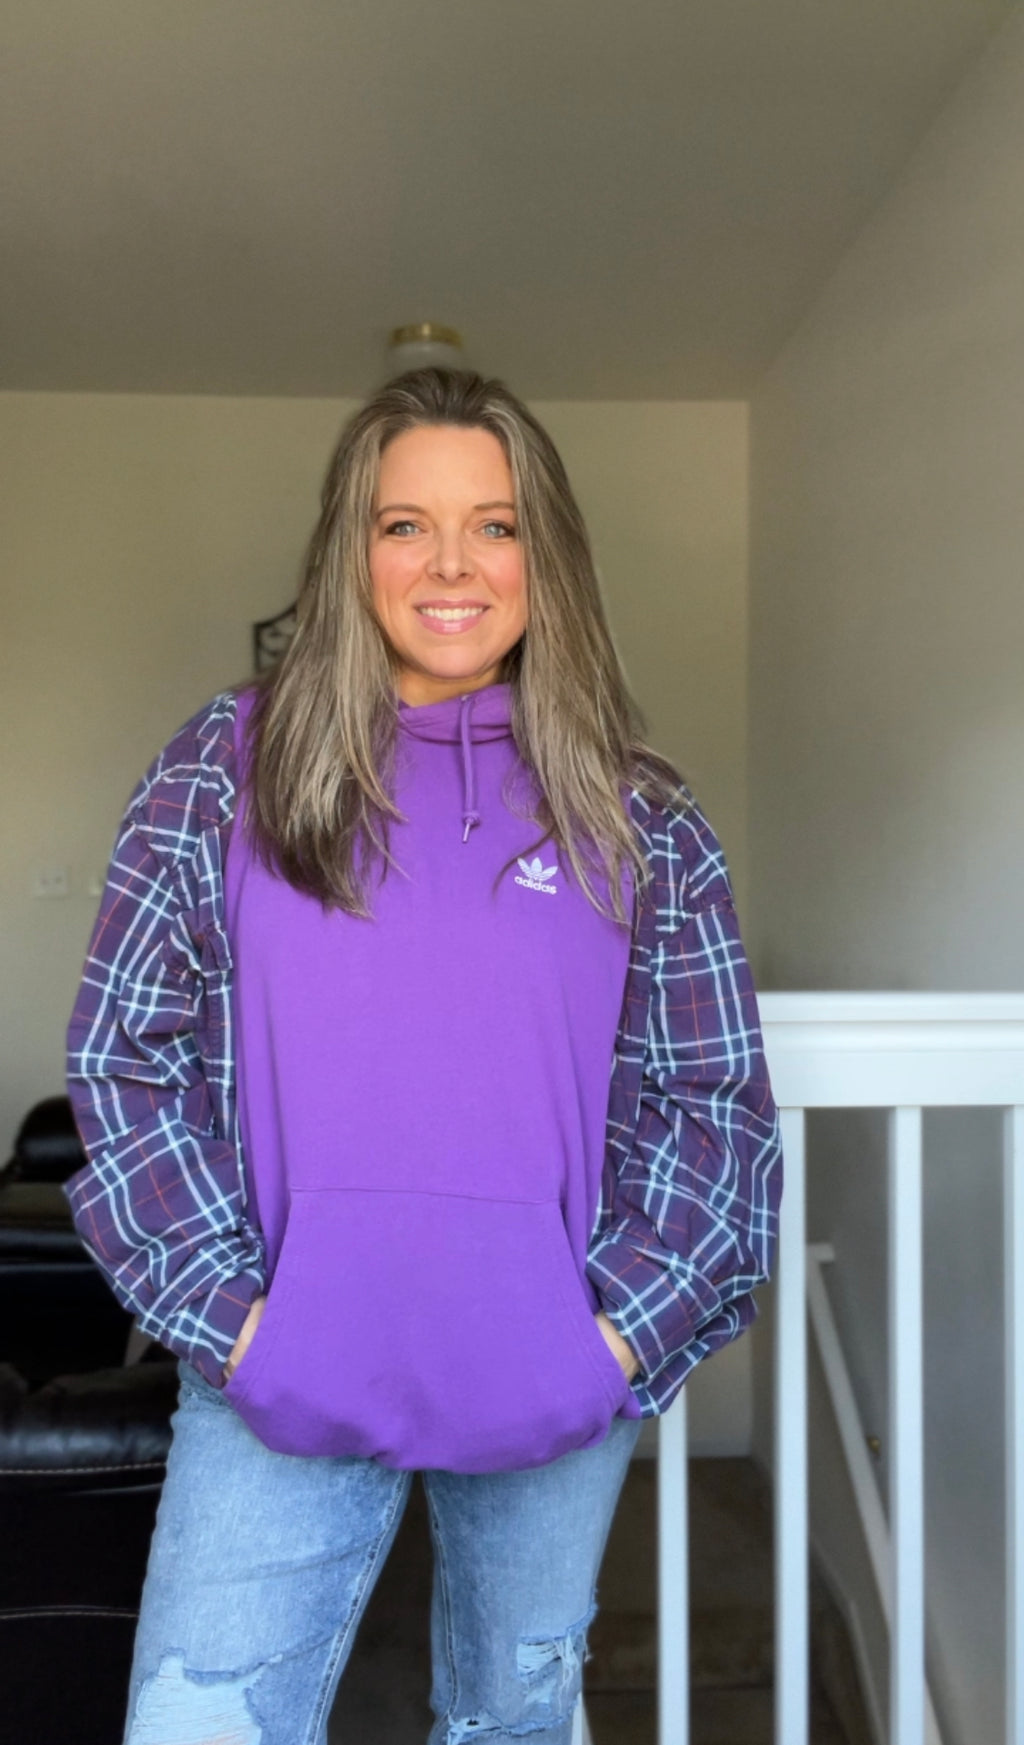 Purple Adidas Upcycled Sweatshirt